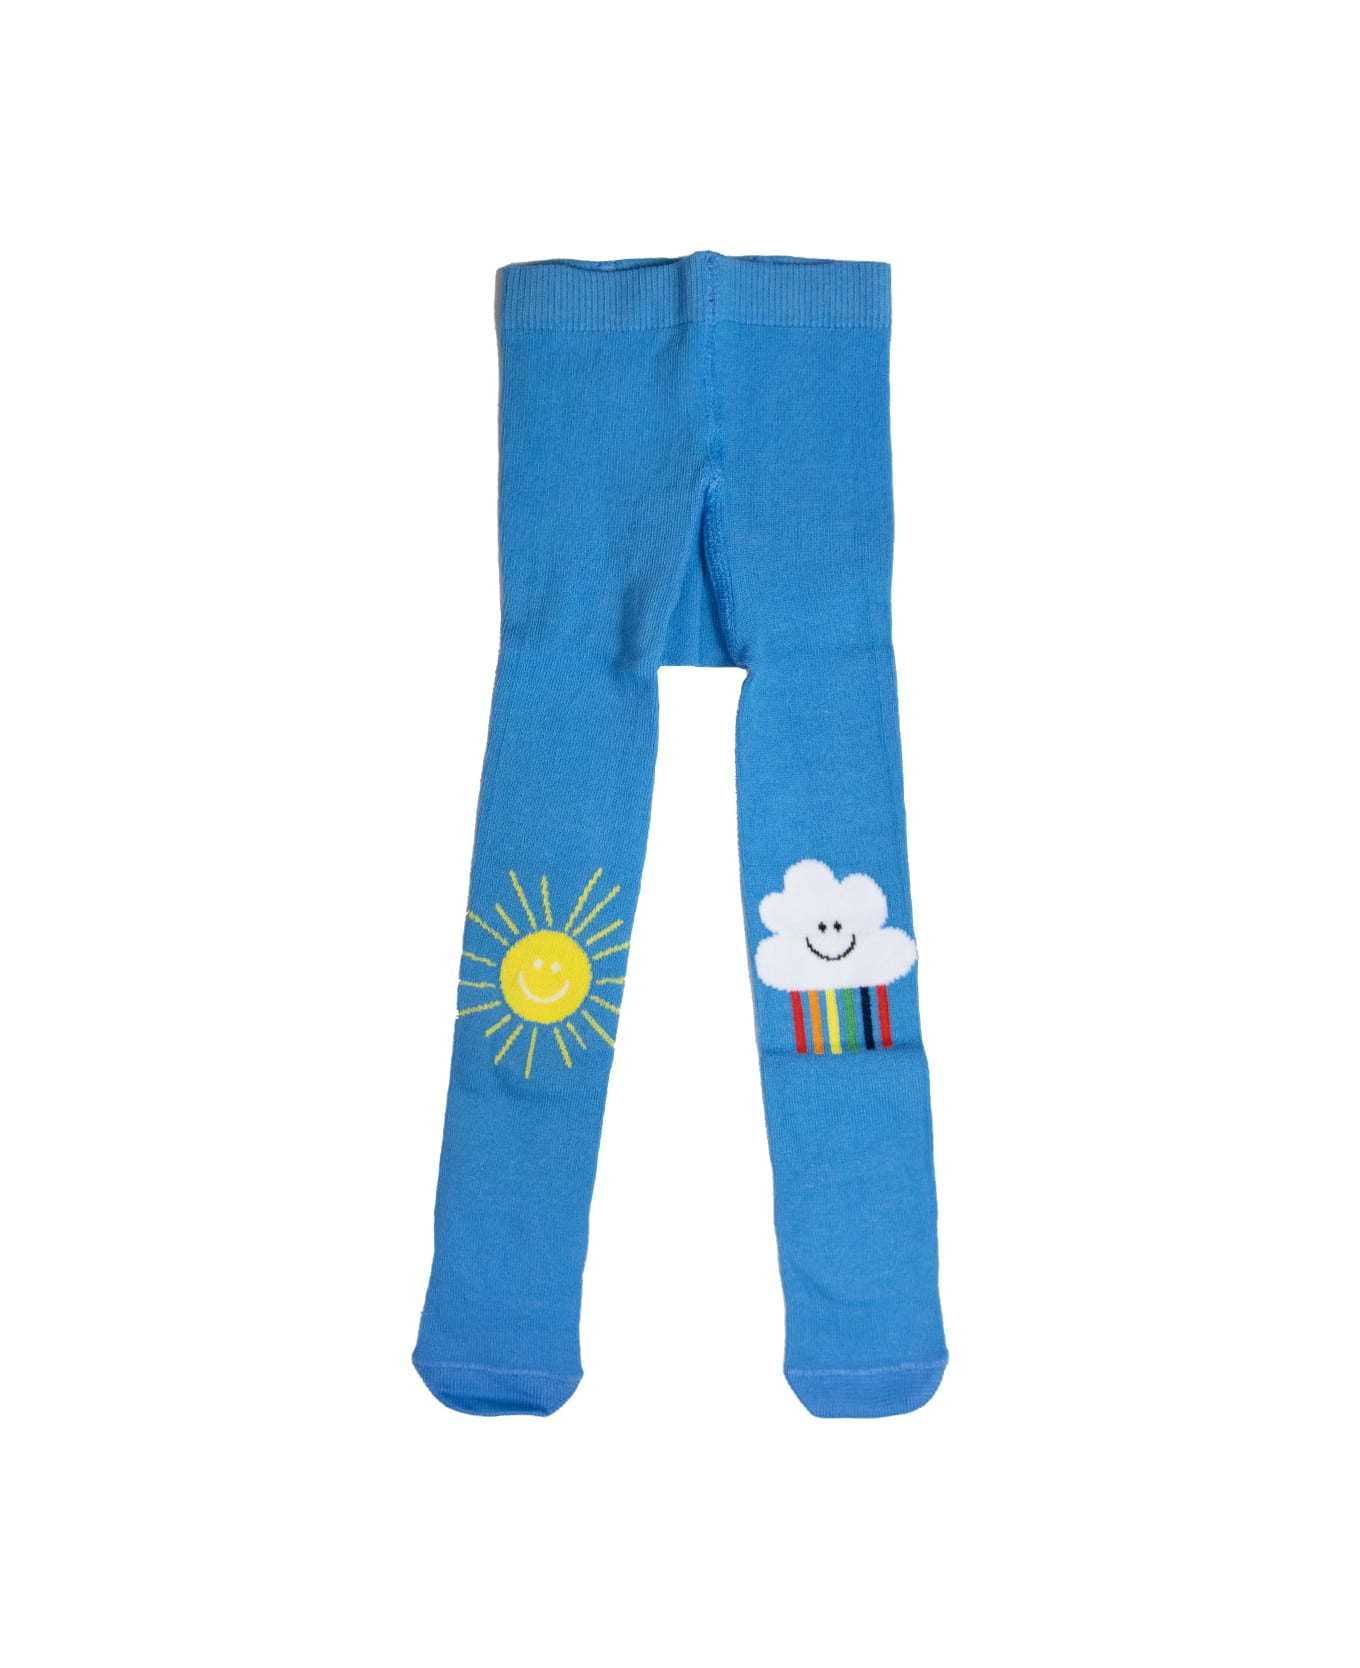 Stella McCartney Kids Cotton Socks - Blue